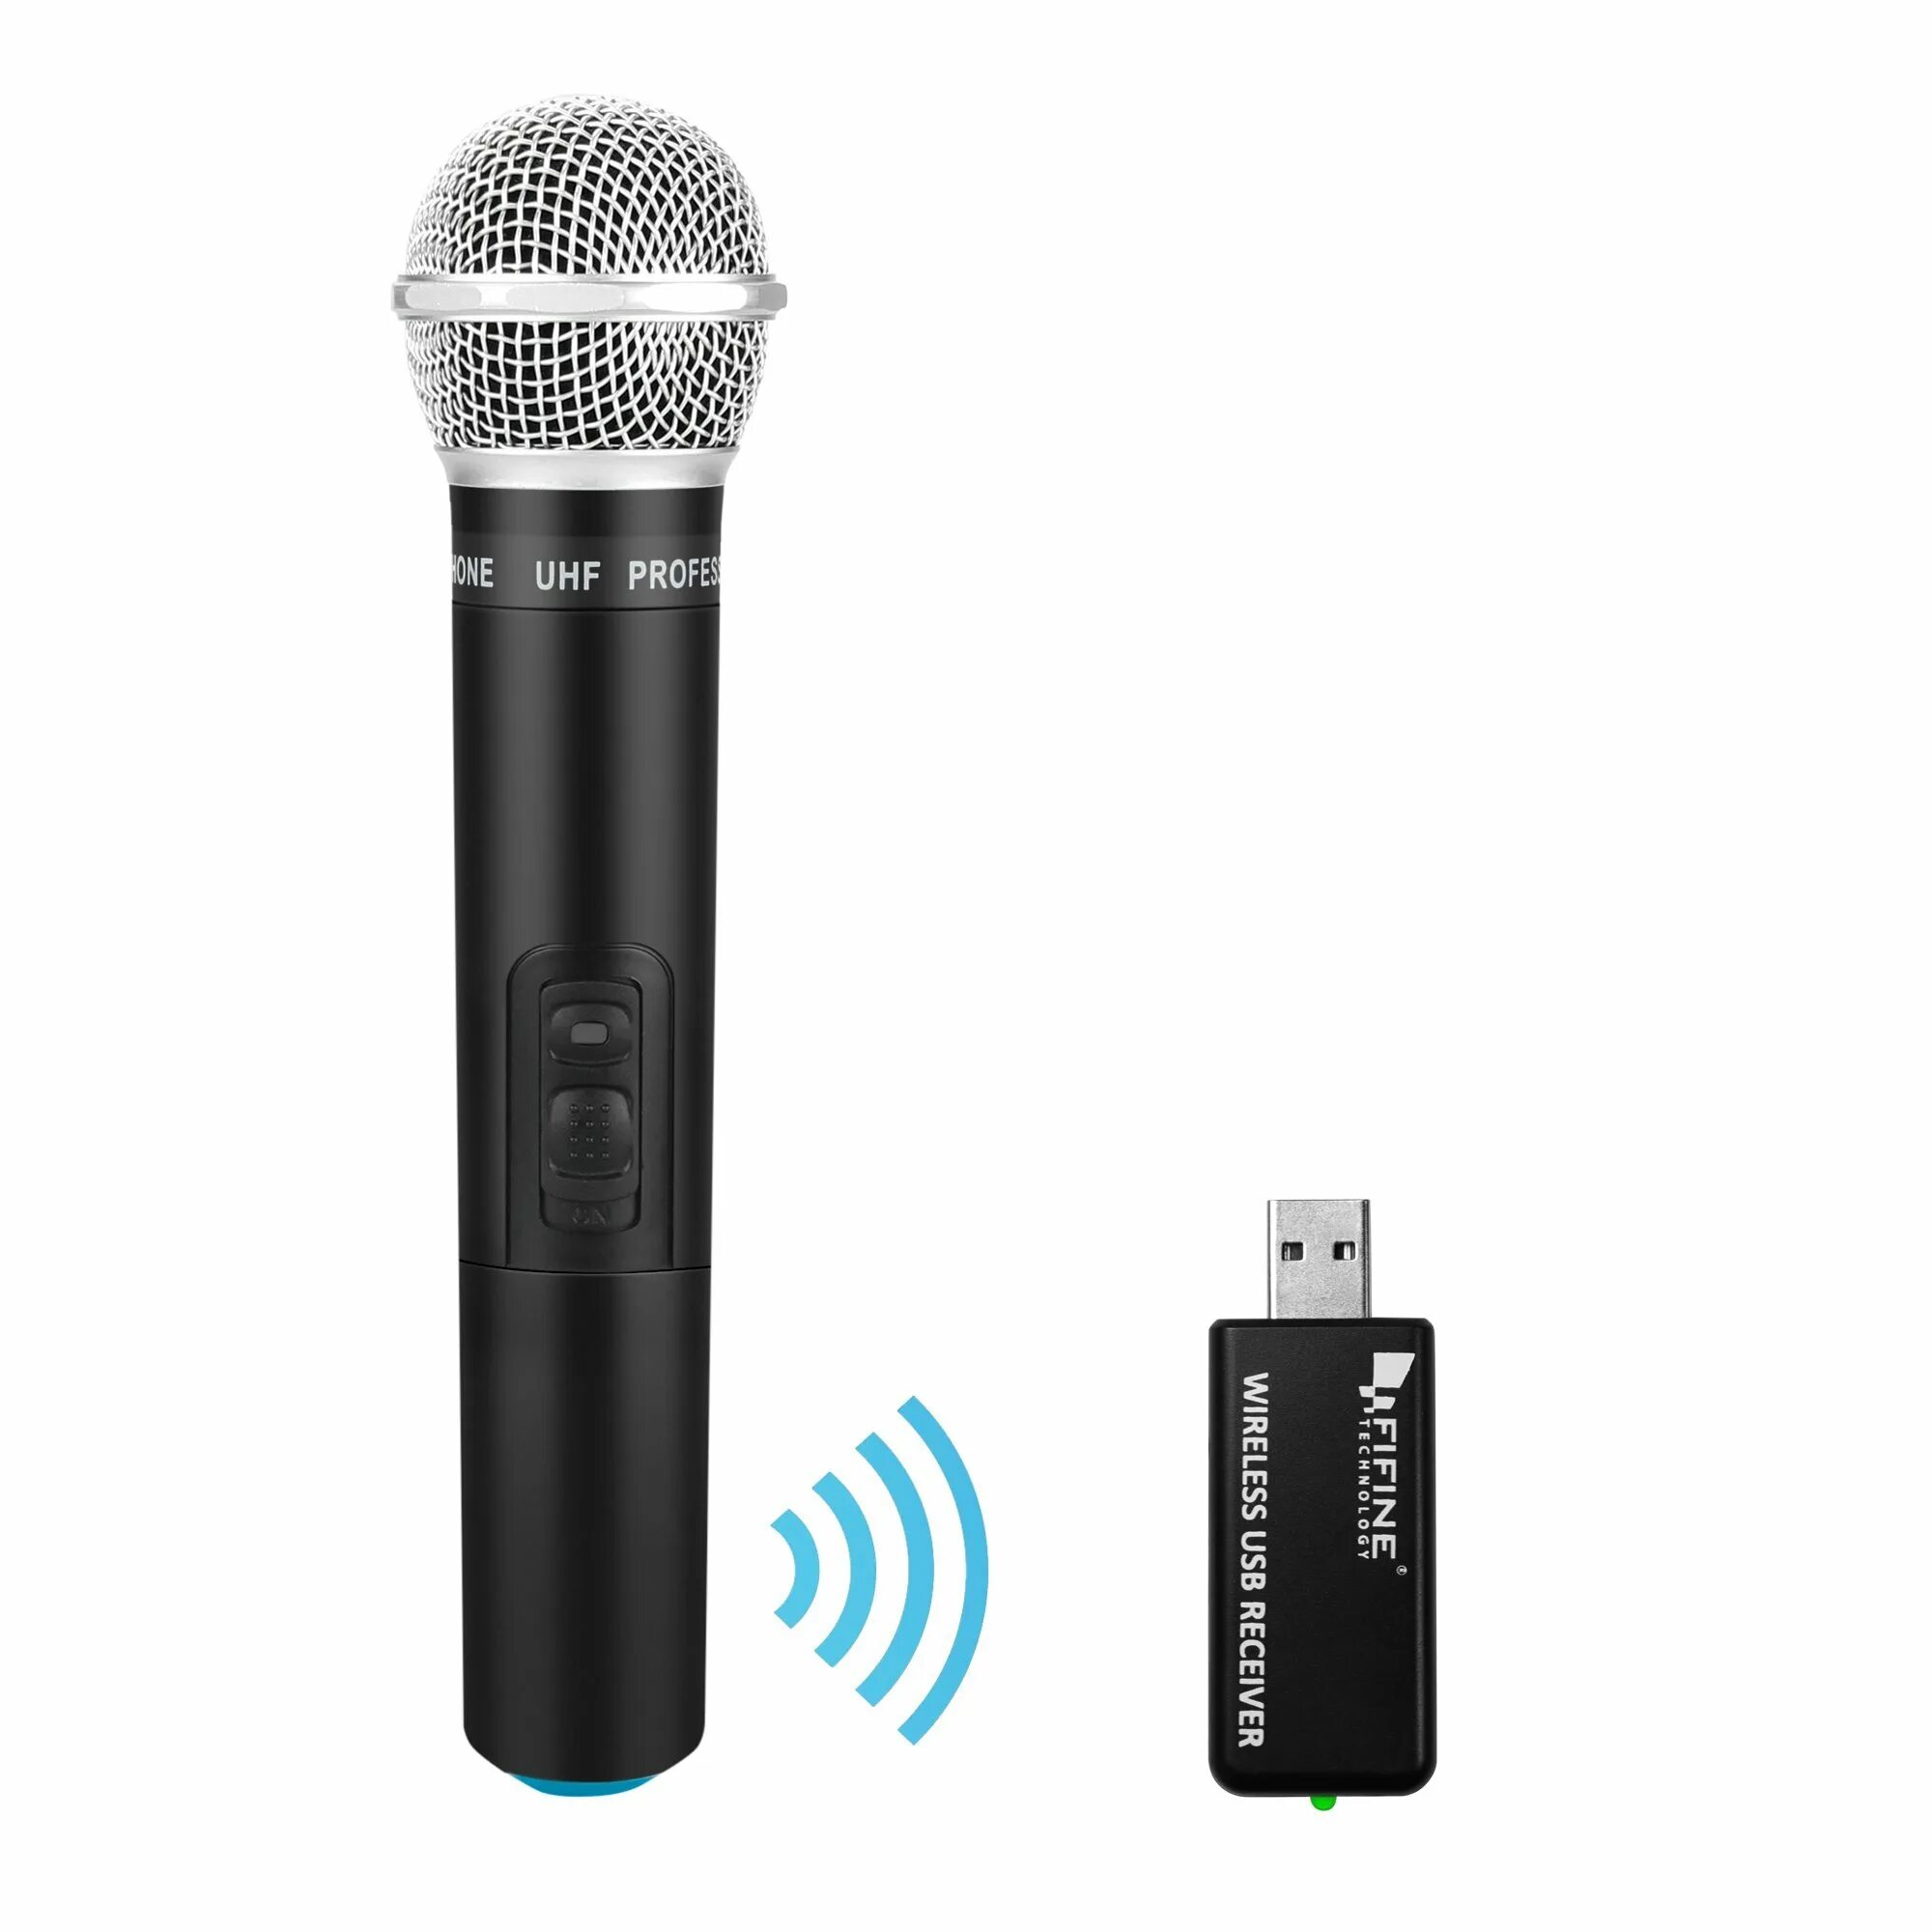 BDL-218 беспроводной микрофон. Микрофон Wireless Microphone w612. Микрофон Fifine a8. Fifine микрофон белый. Беспроводные микрофоны для телефона купить